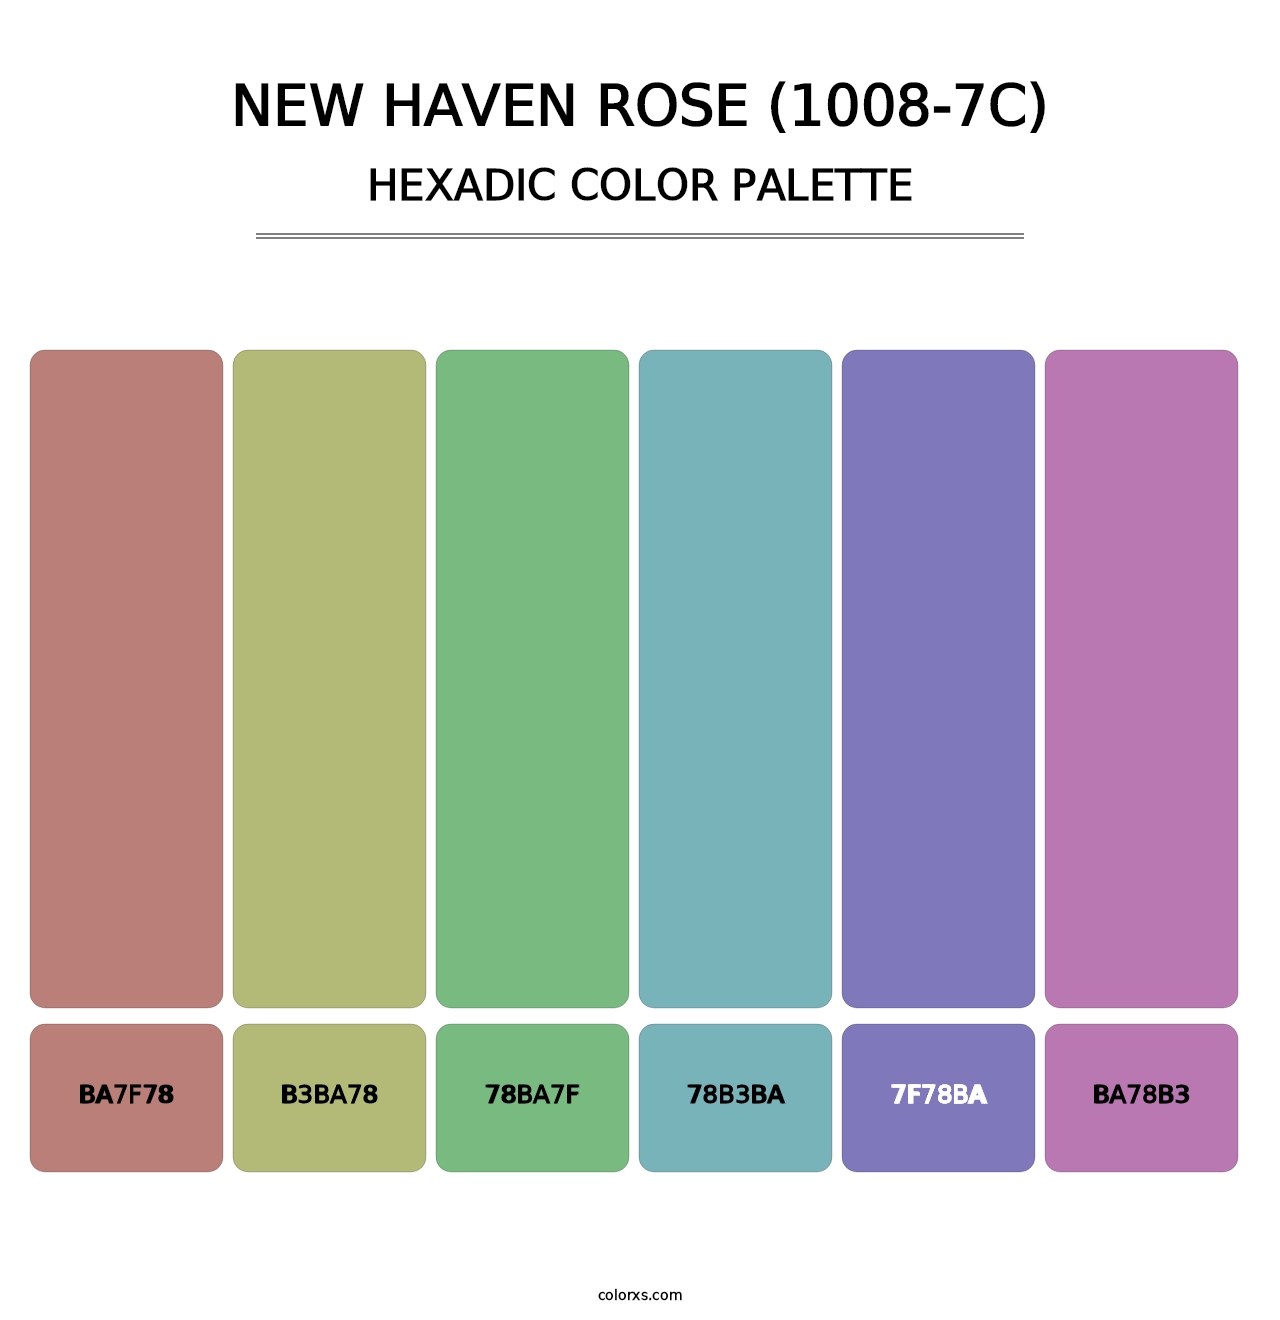 New Haven Rose (1008-7C) - Hexadic Color Palette